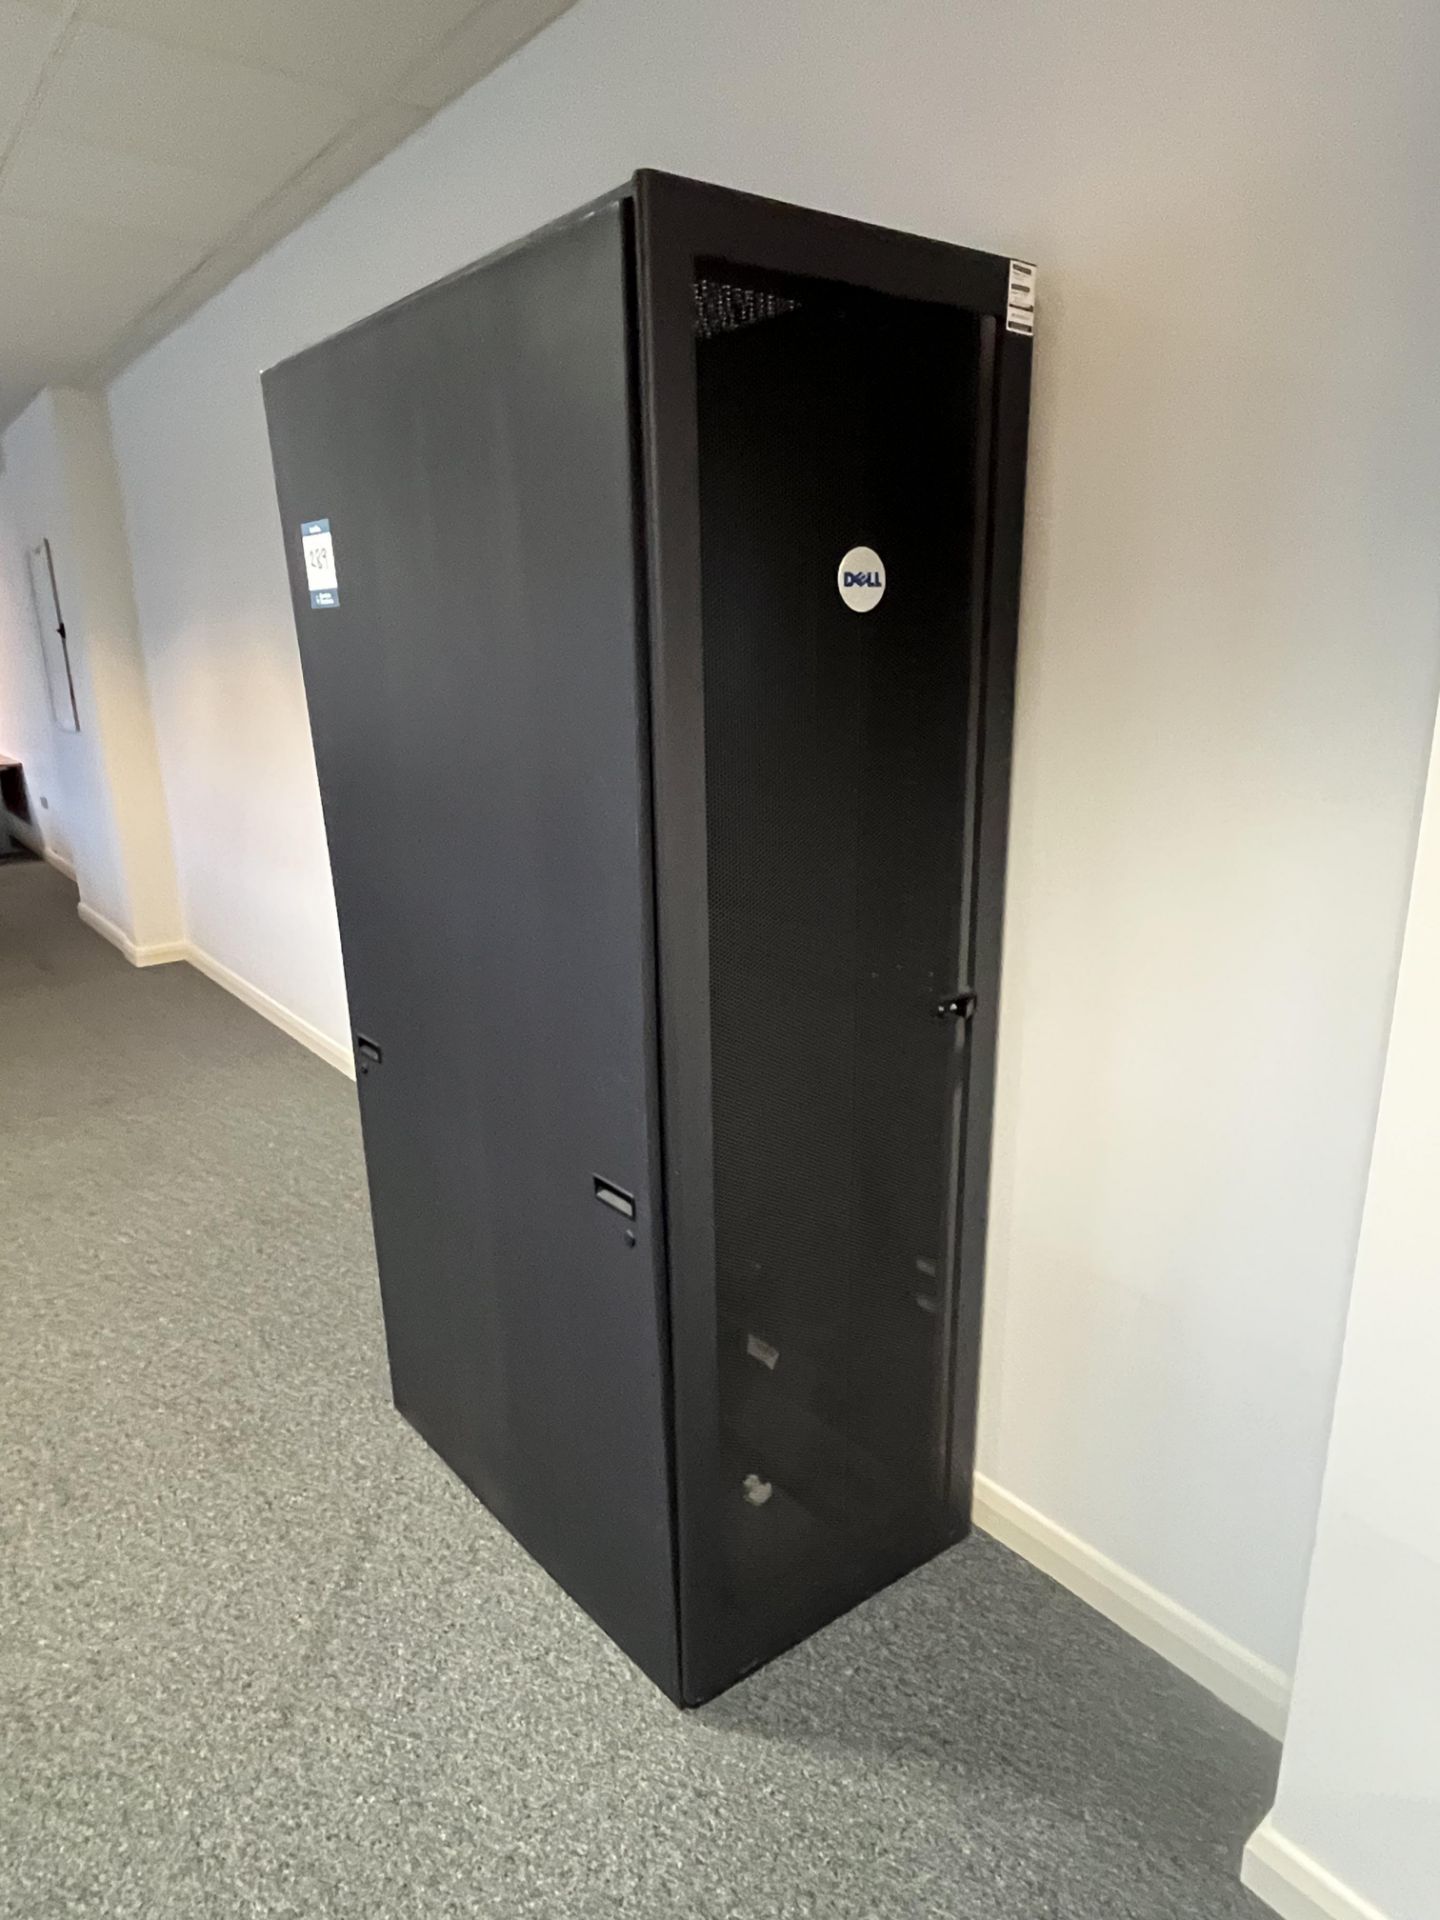 Dell, single door server/comms cabinet (no shelves)